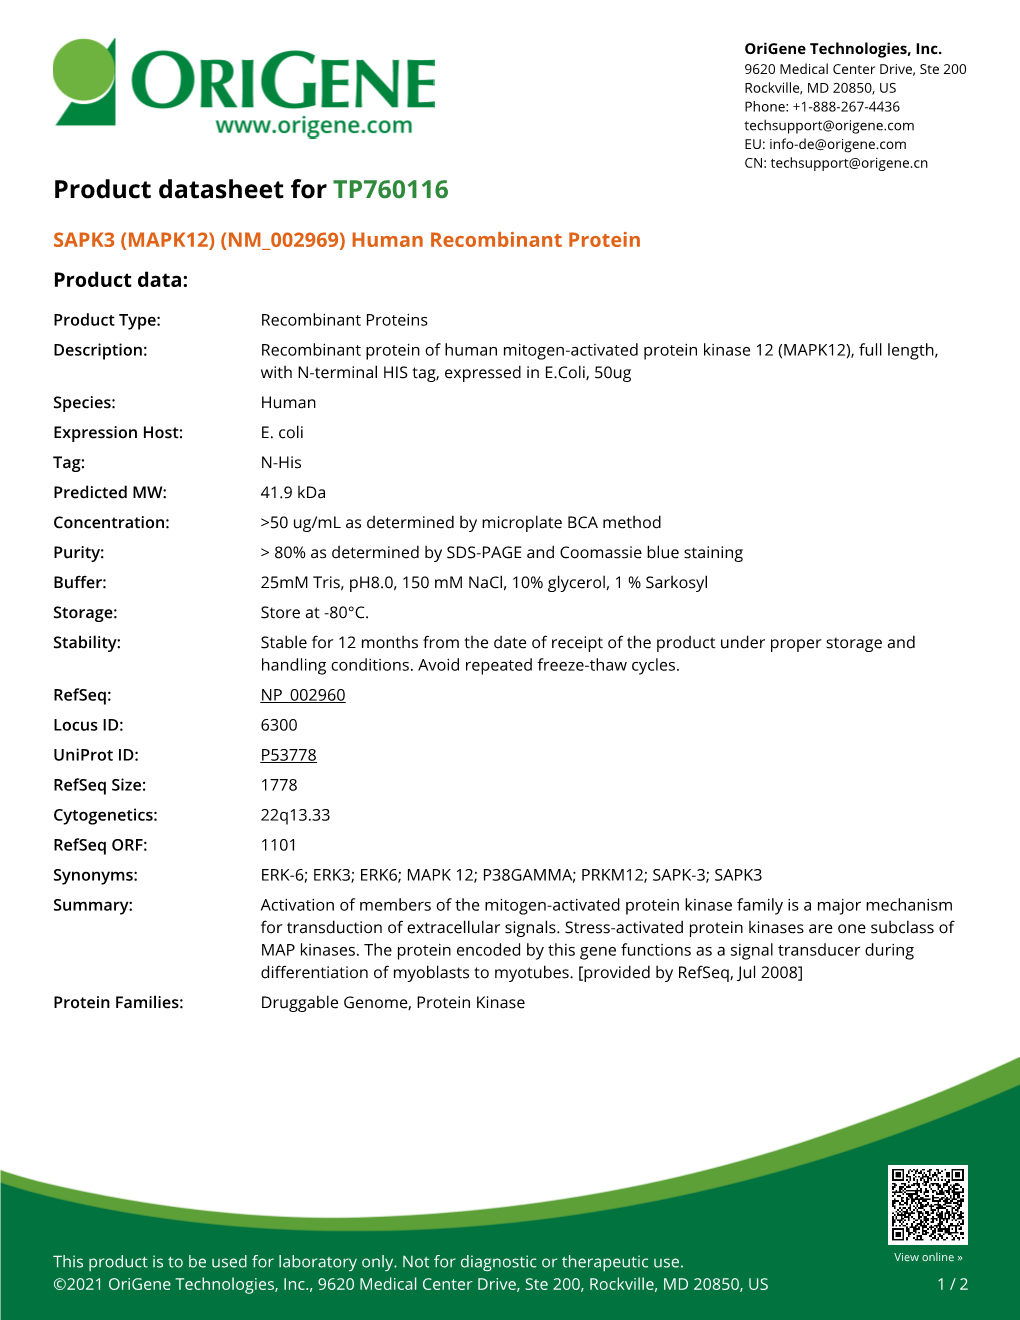 SAPK3 (MAPK12) (NM 002969) Human Recombinant Protein Product Data